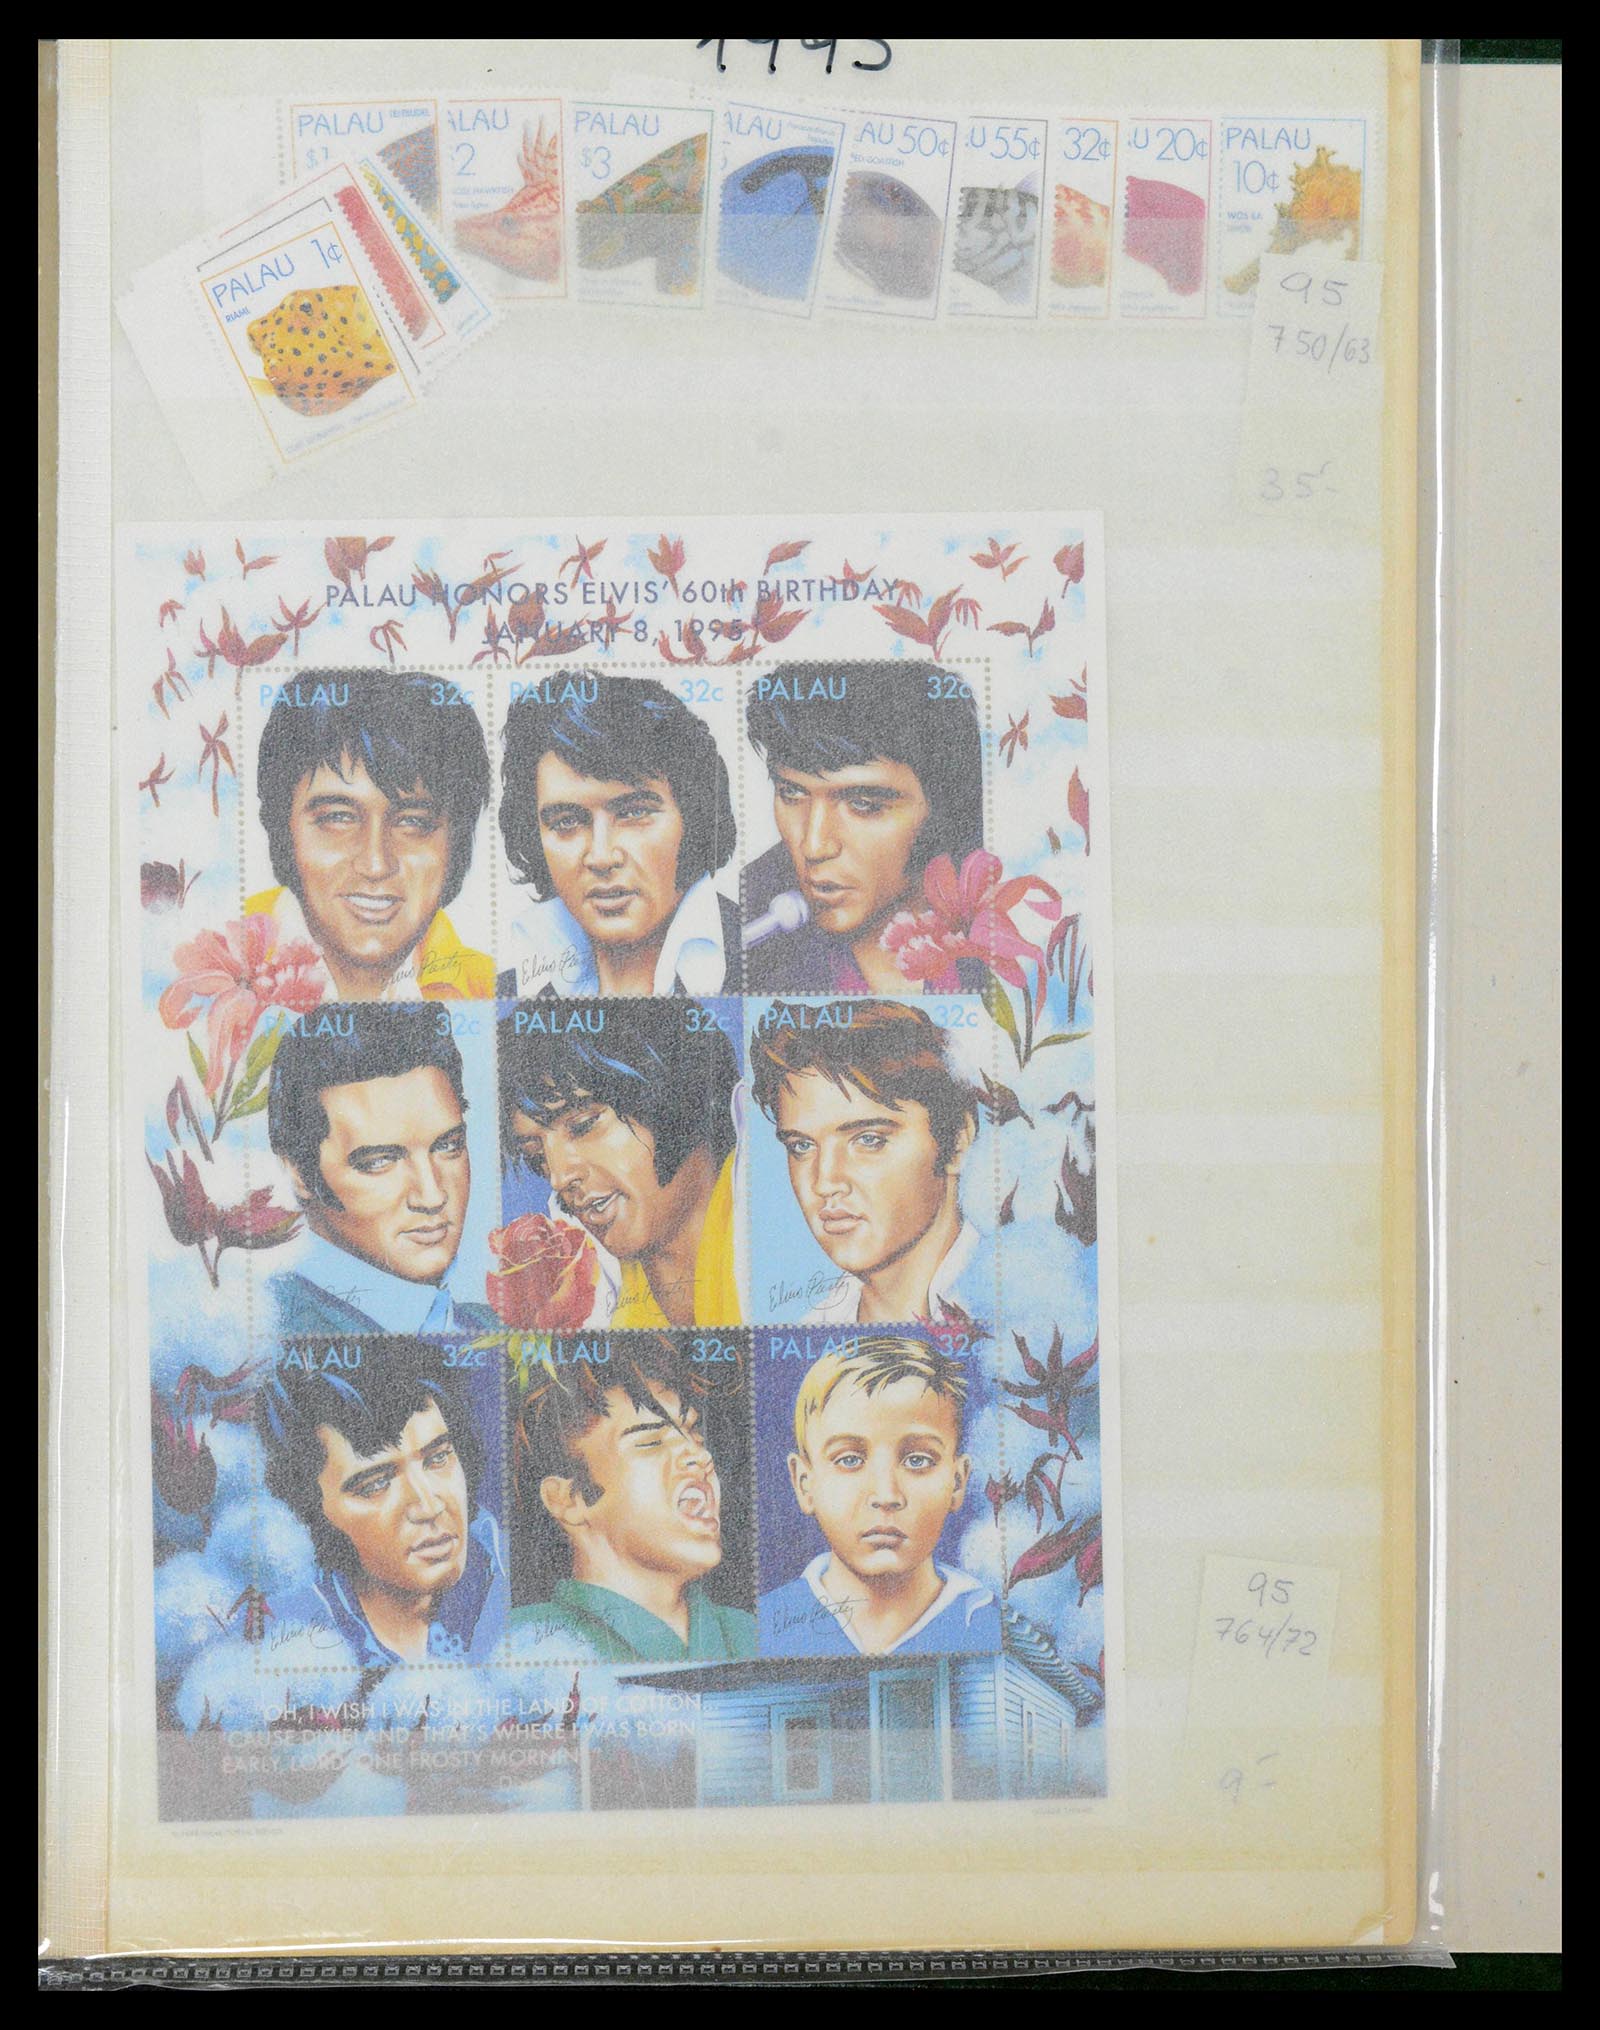 39222 0059 - Stamp collection 39222 Palau, Micronesia and Marshall islands 1980-1995.